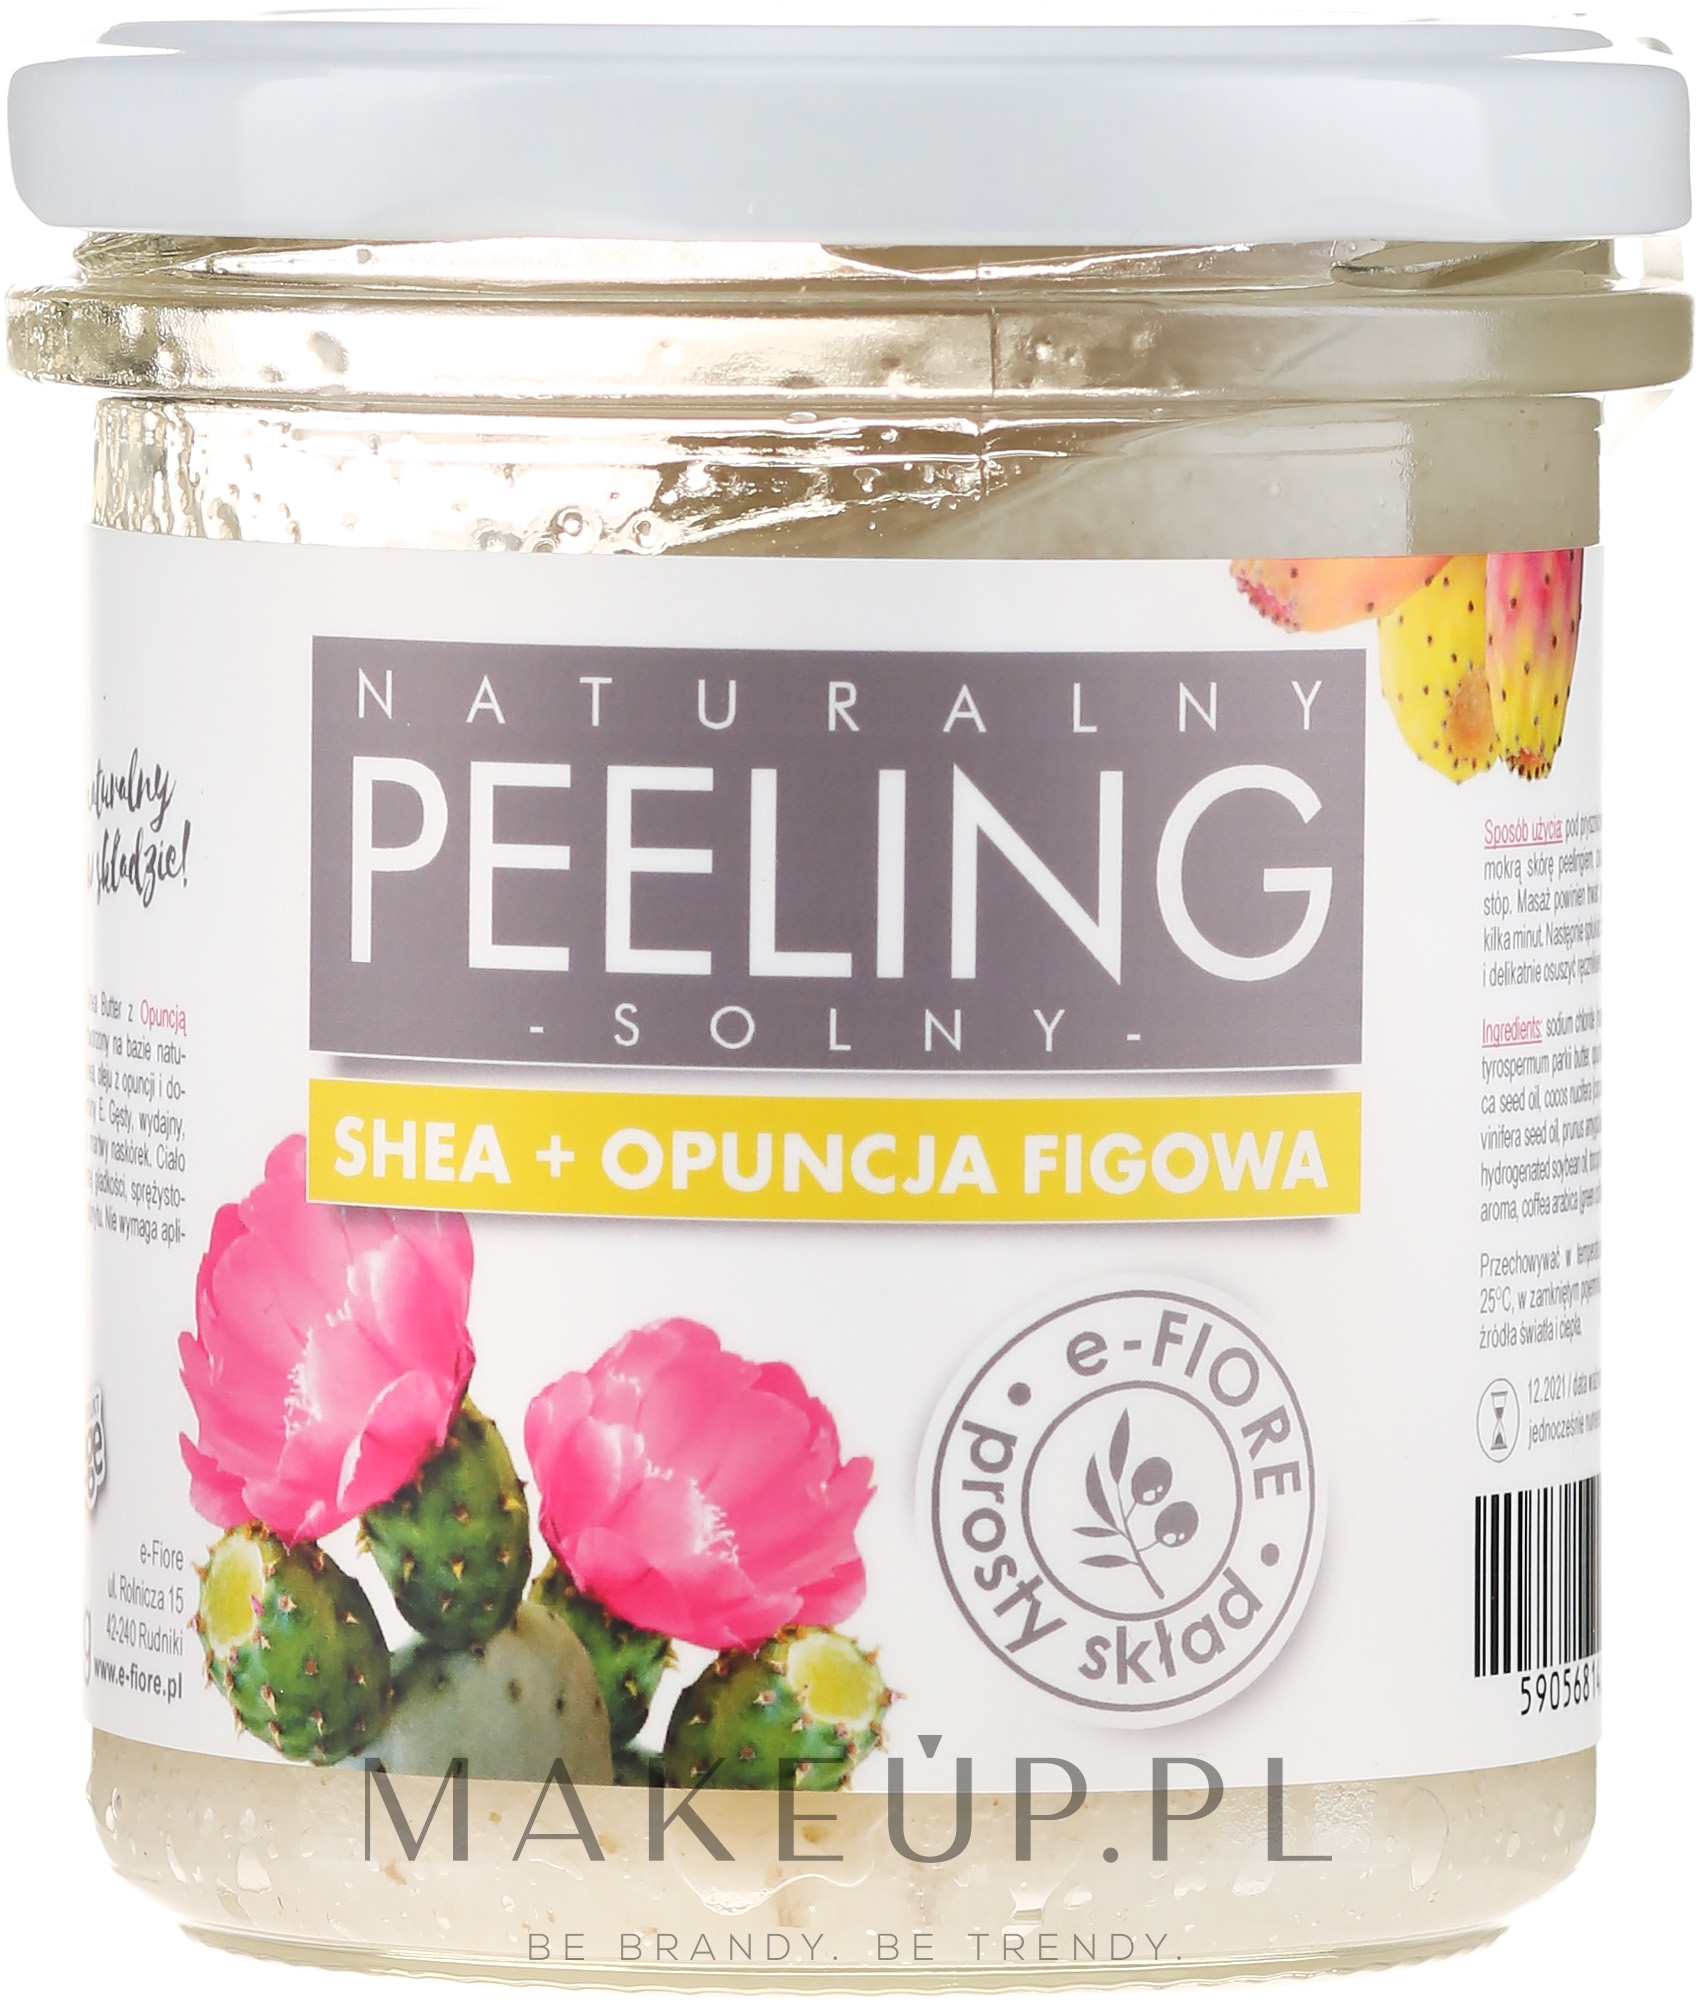 Naturalny peeling solny Shea + opuncja figowa - E-Fiore — Zdjęcie 350 ml